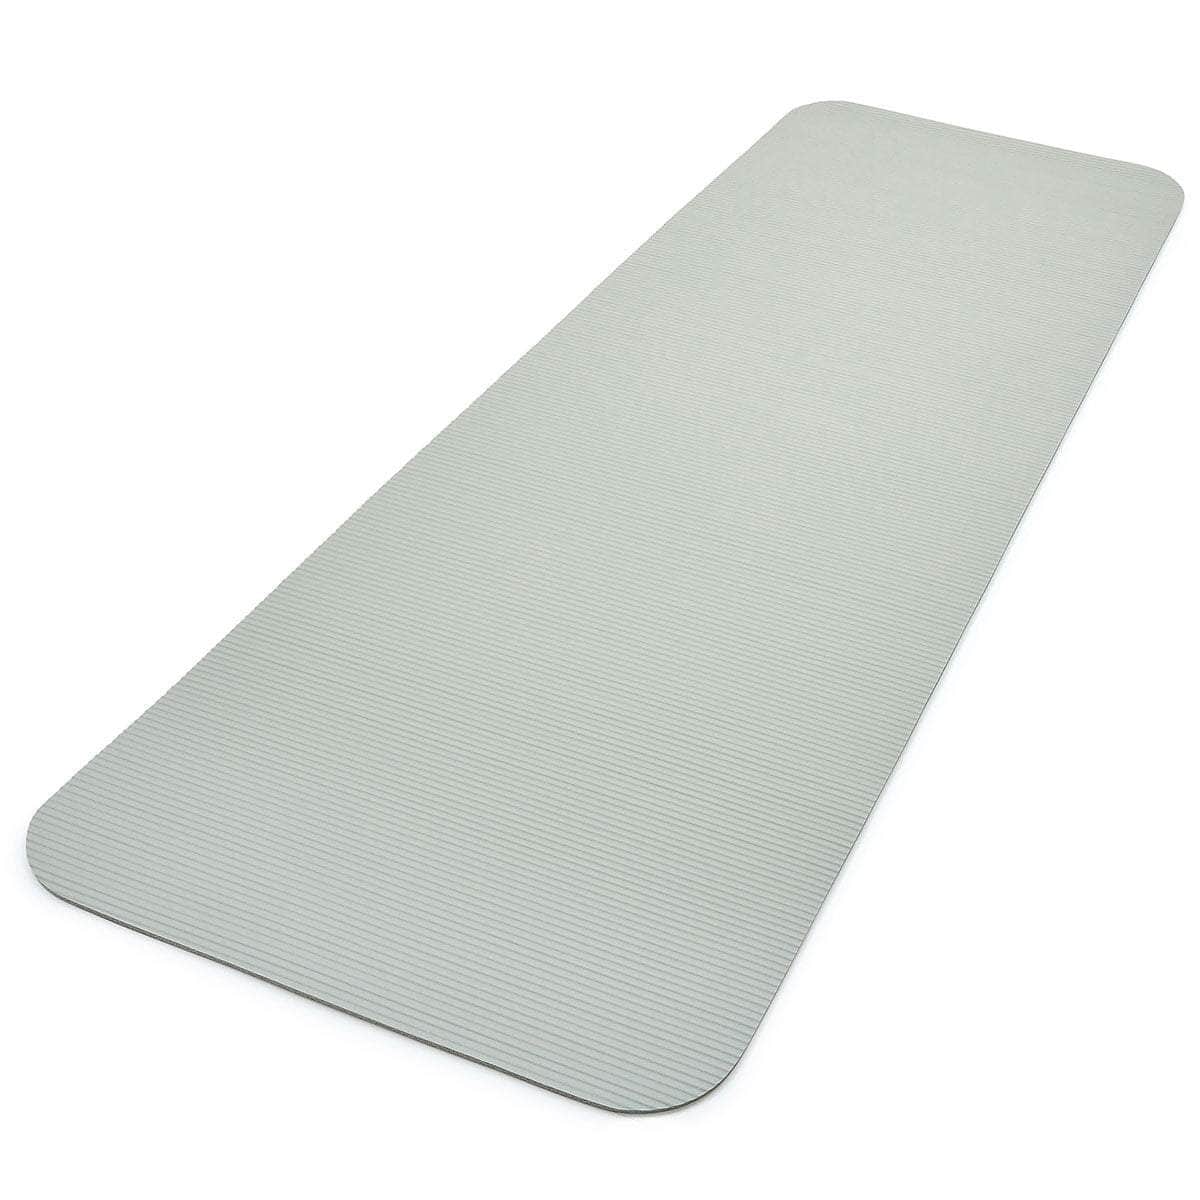 Premium Black Yoga Mat: 1.73m x 0.61m x 7mm Thickness